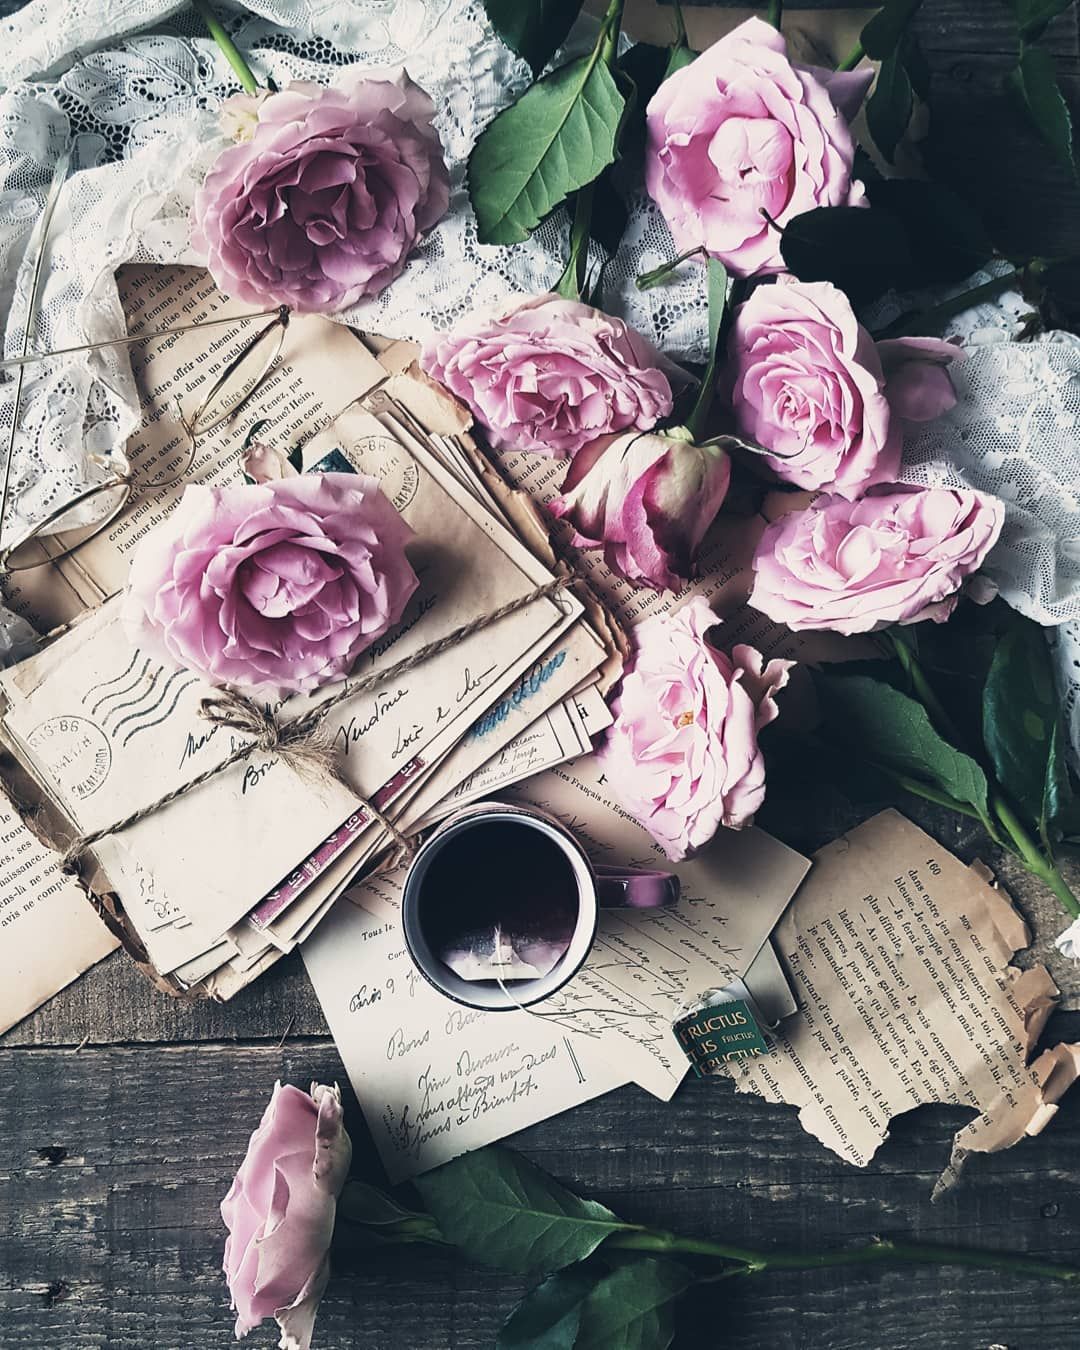 Garten Katalog Schön ð Jasmina ð On Instagram “un Petit Bouquet De Rose Pour